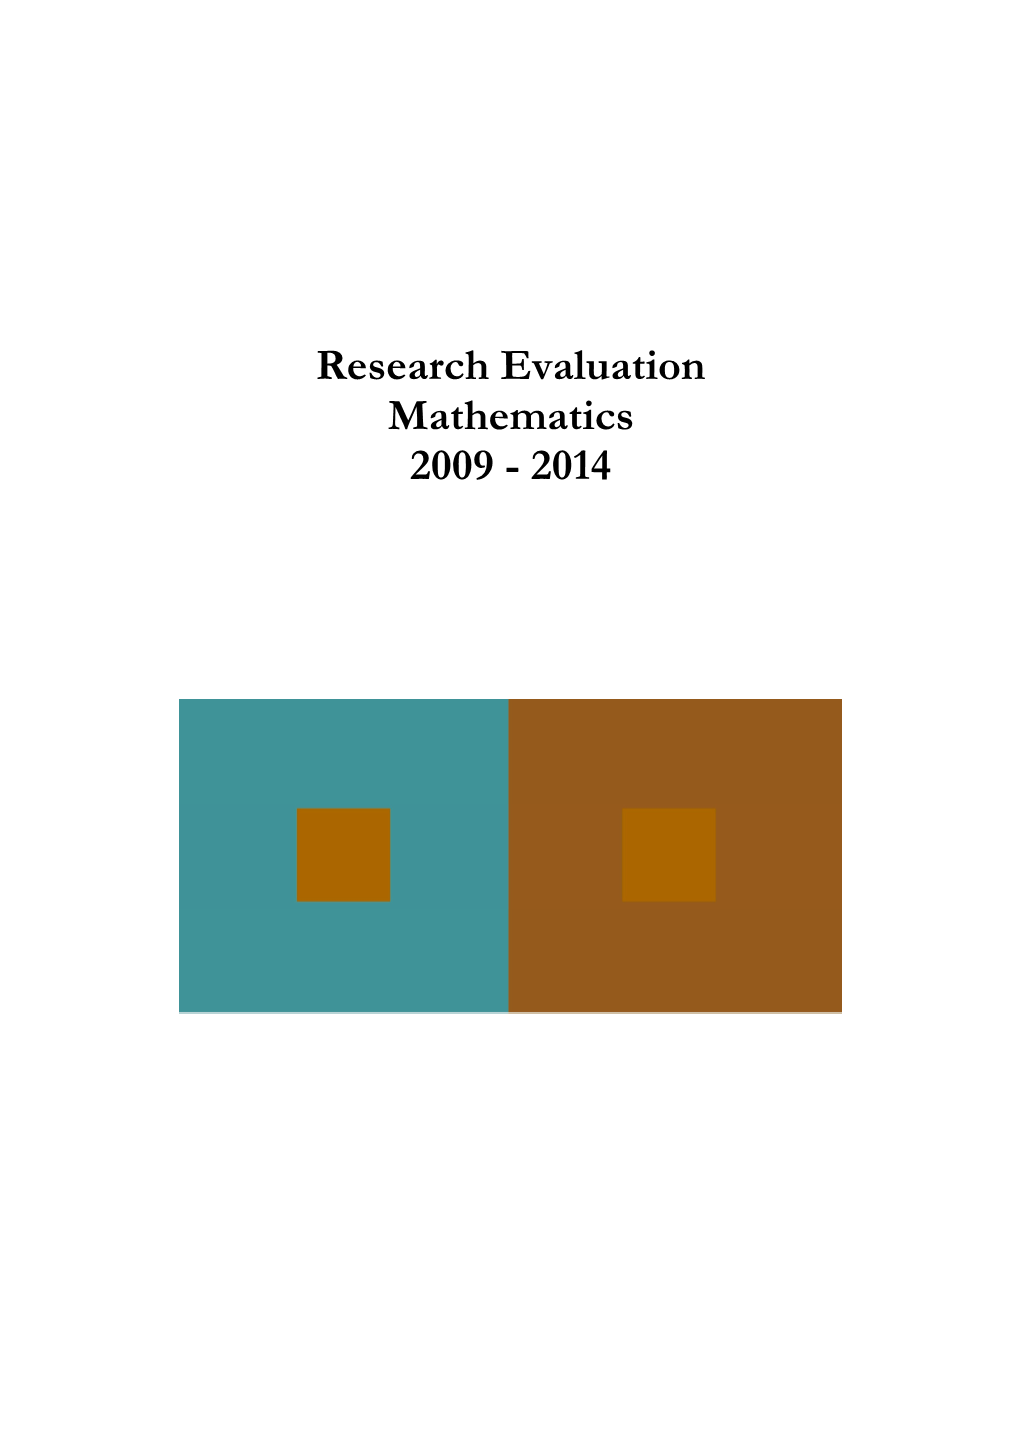 Mathematics 2009 - 2014